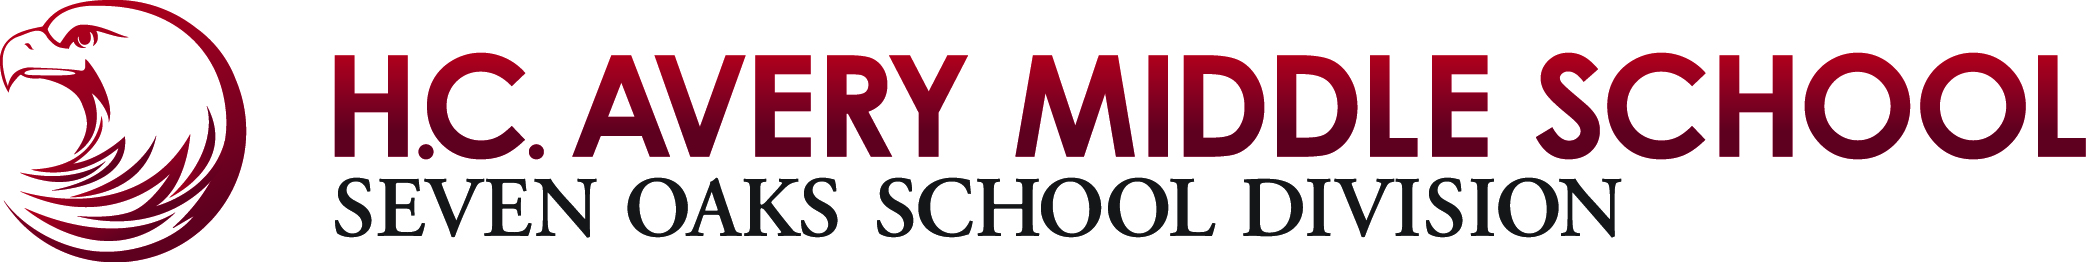 CMYK-HCAveryMiddleSchool-Full-Logo.jpg